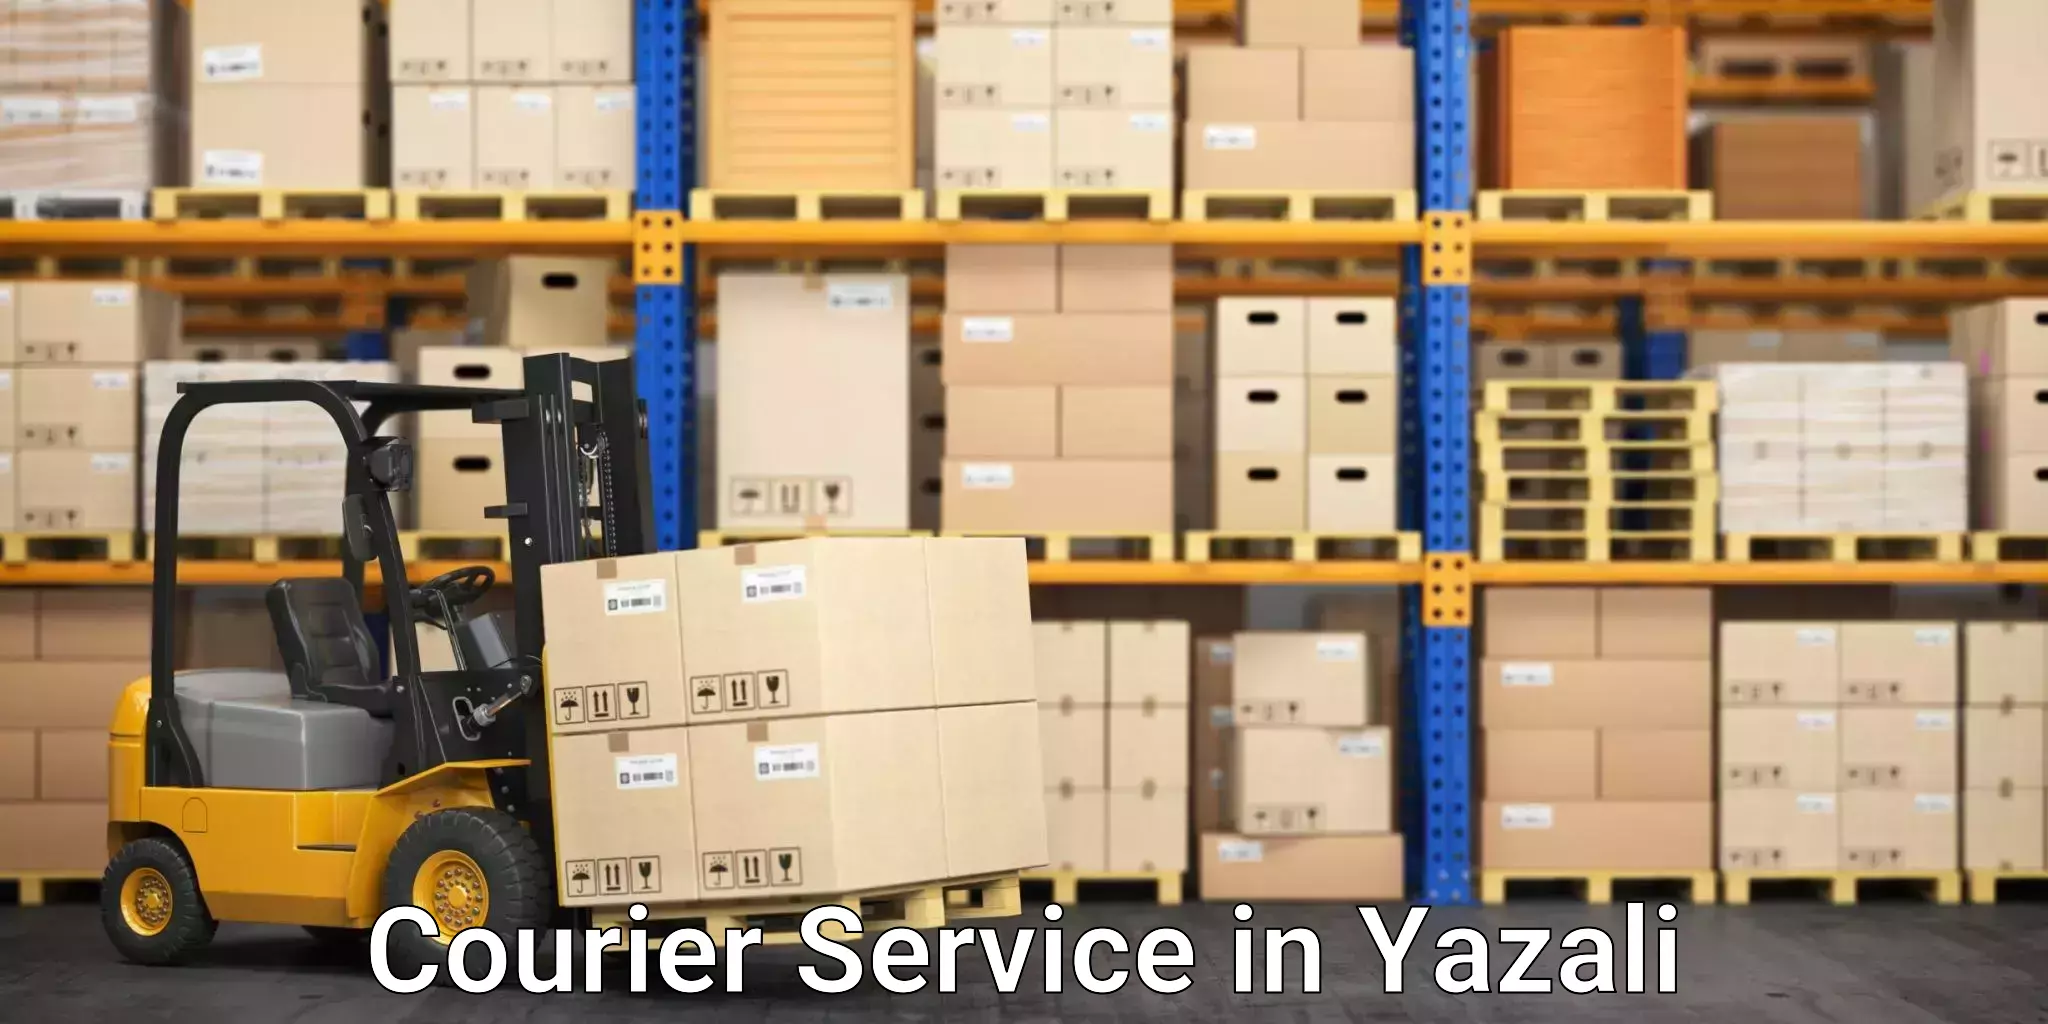 Innovative shipping solutions in Yazali